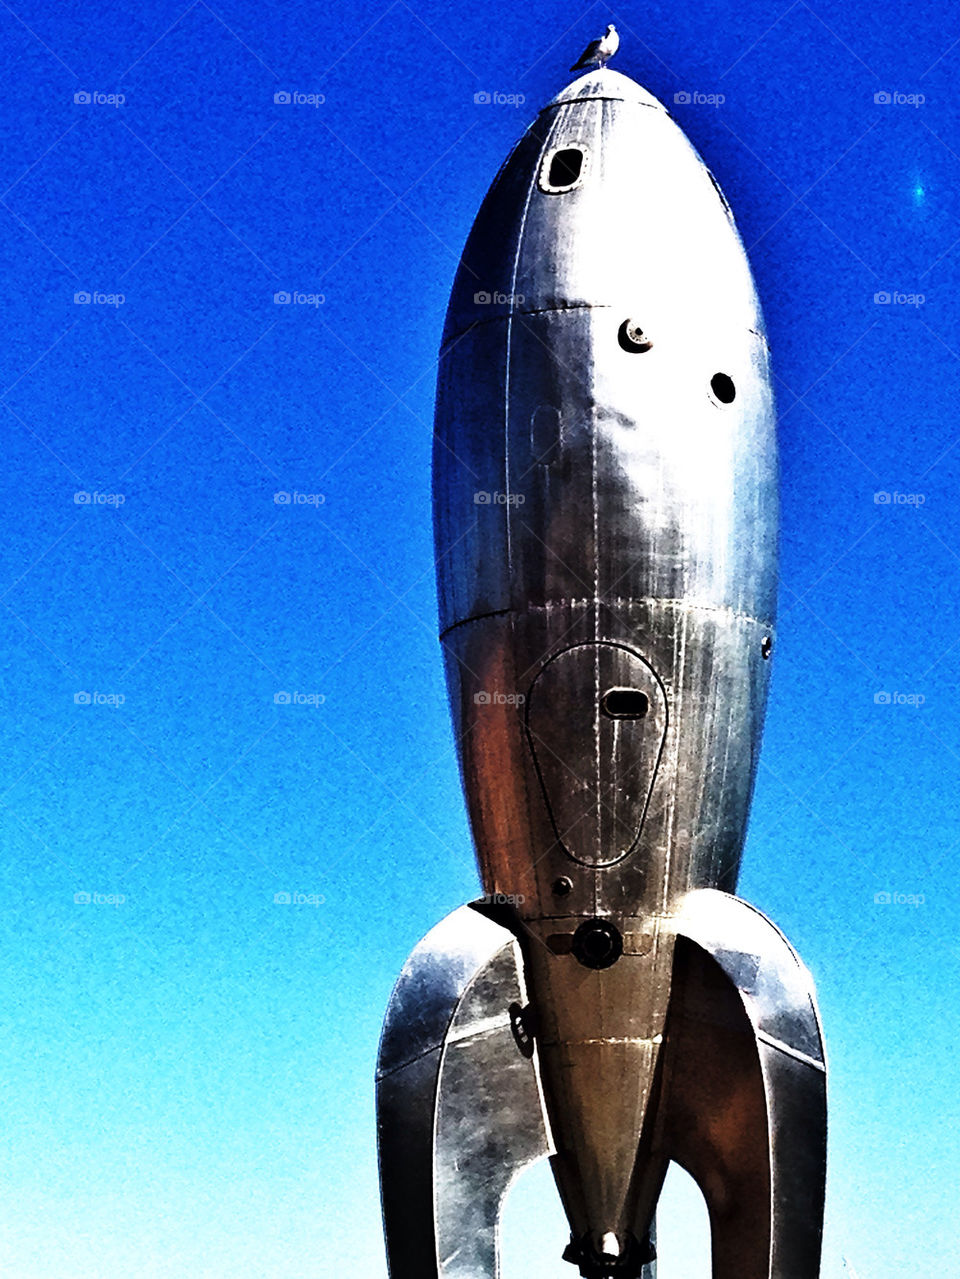 Shining chrome retro sci-fi rocketship